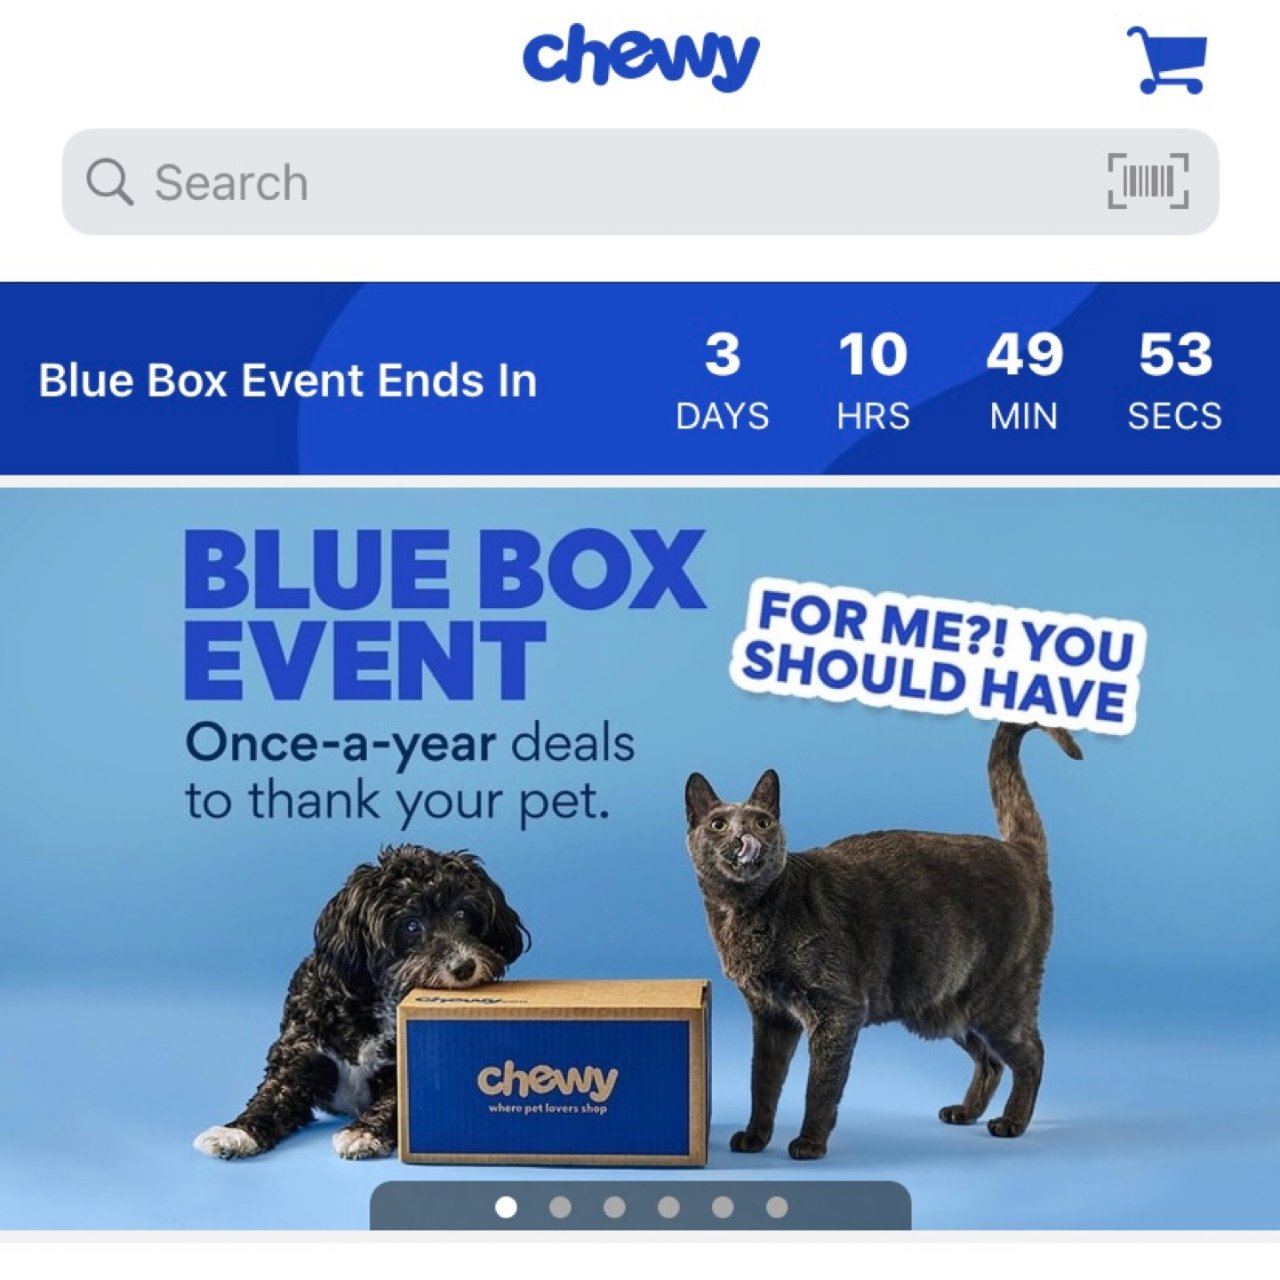 chewy一年一度的blue box活动...